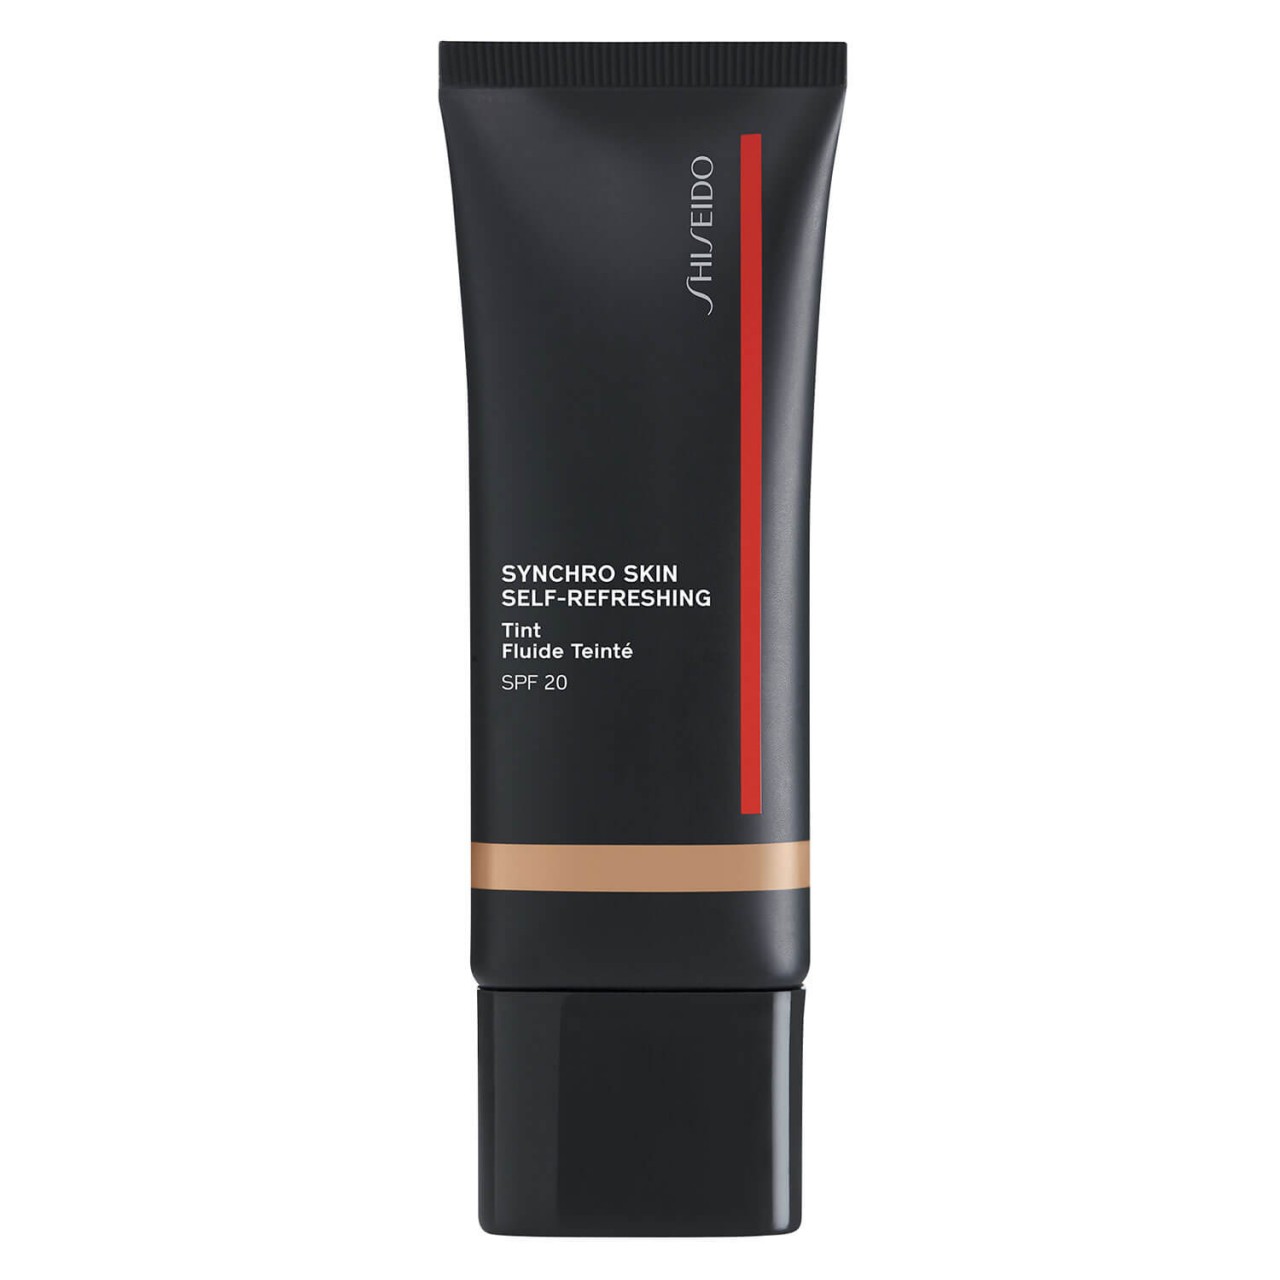 Synchro Skin Self-Refreshing - Tint SPF 20 Light Hiba 235 von Shiseido